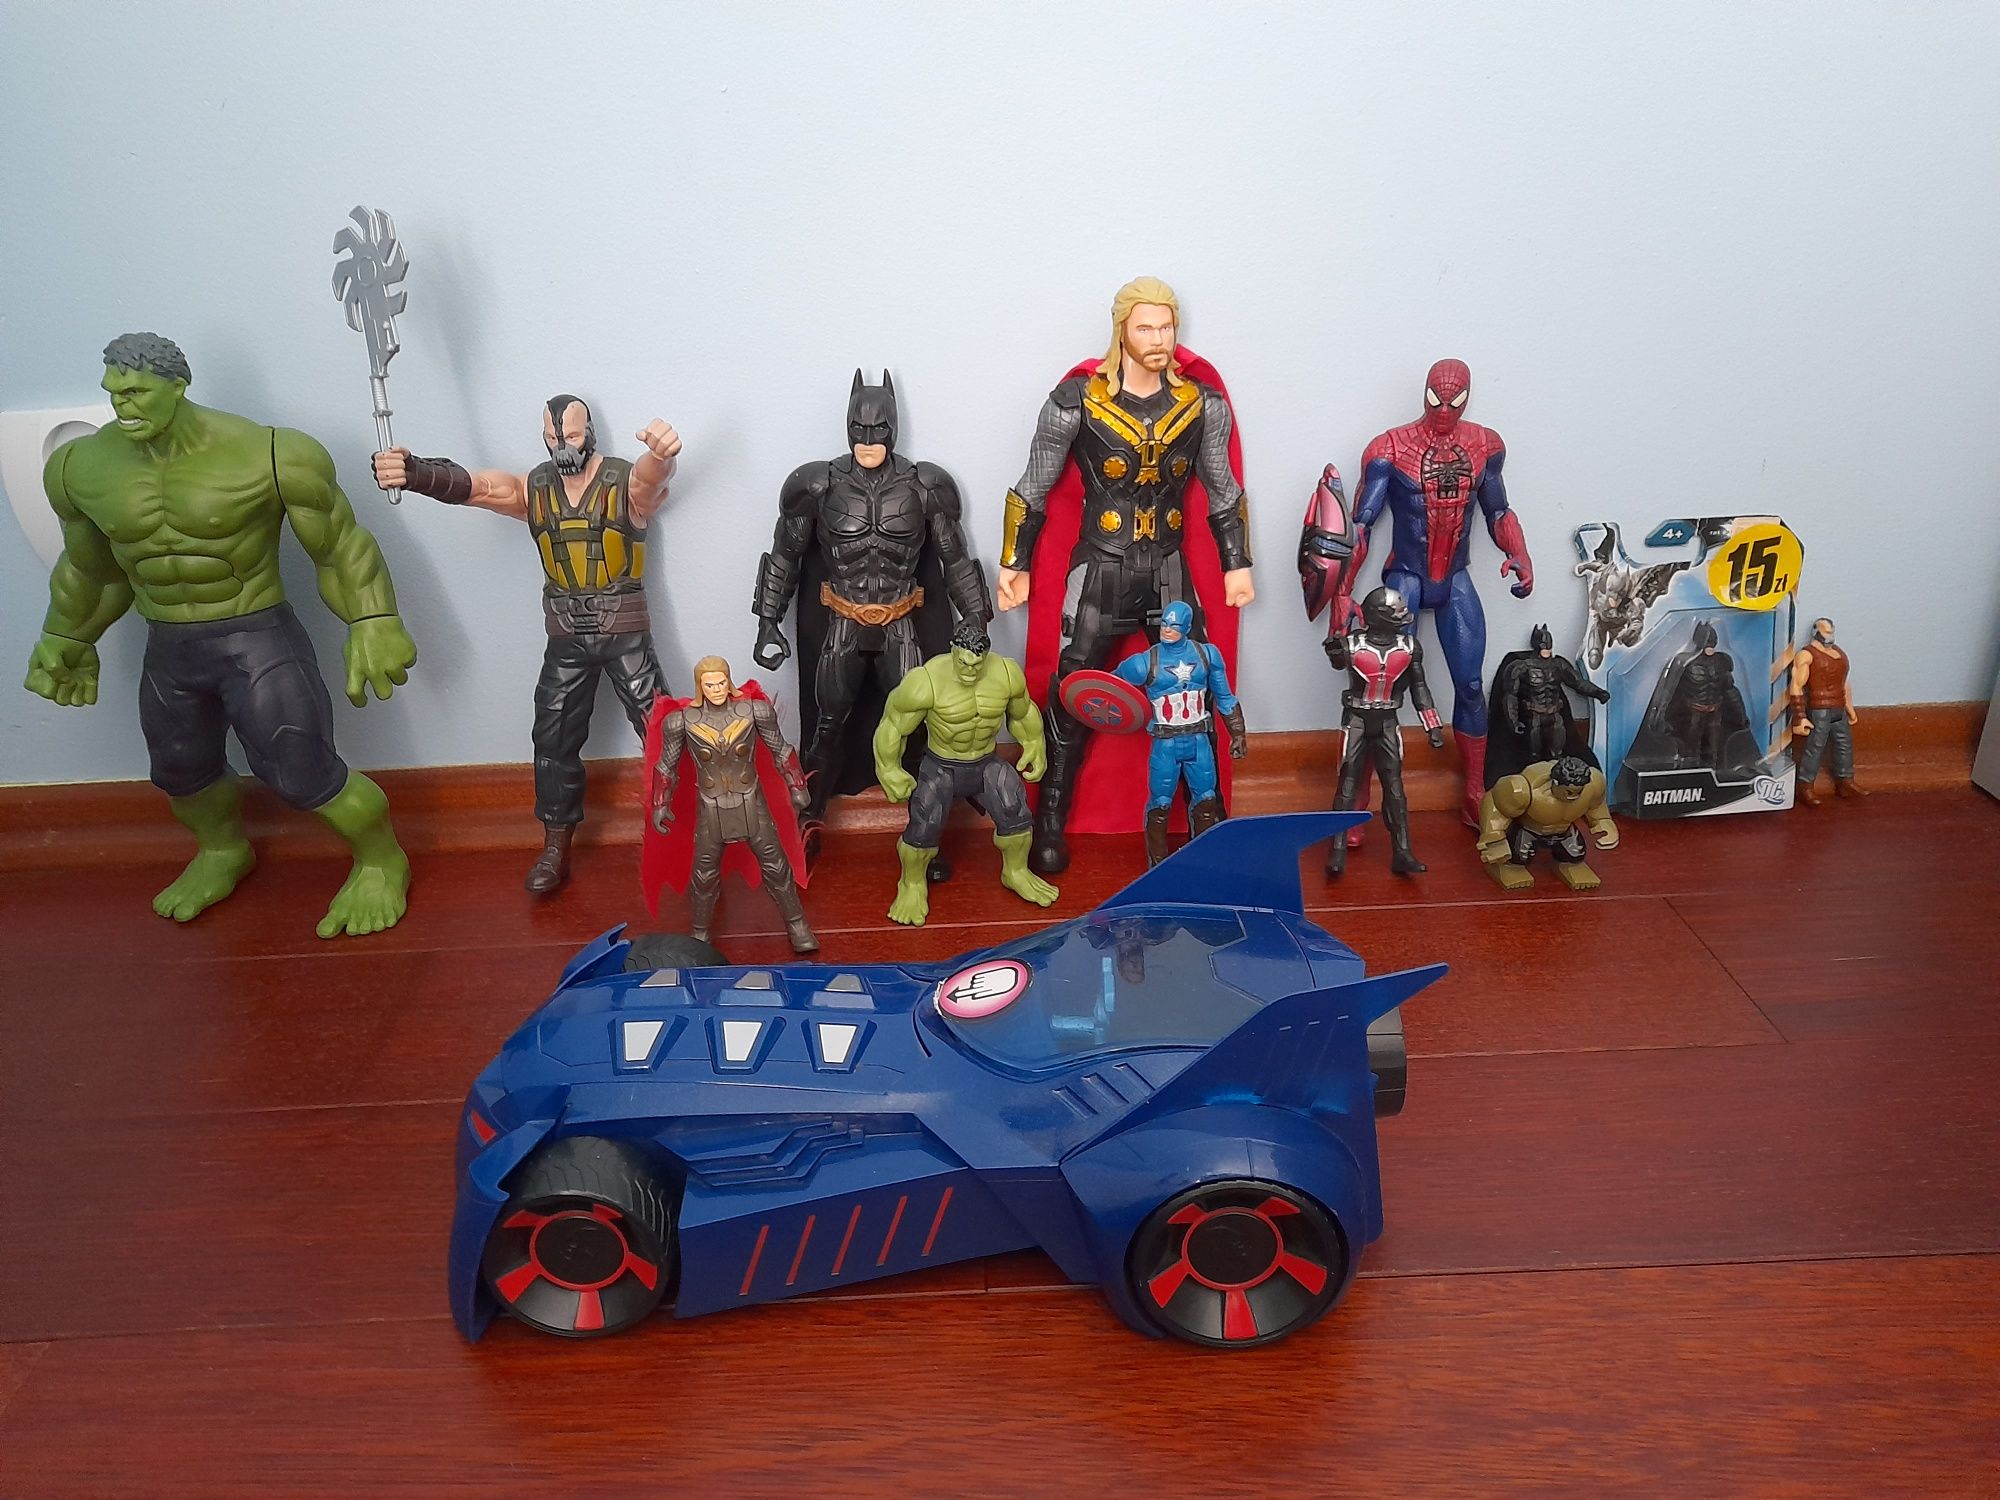 Sprzedam figurki Superbohaterów, Batman, Spider-Man, Hulk